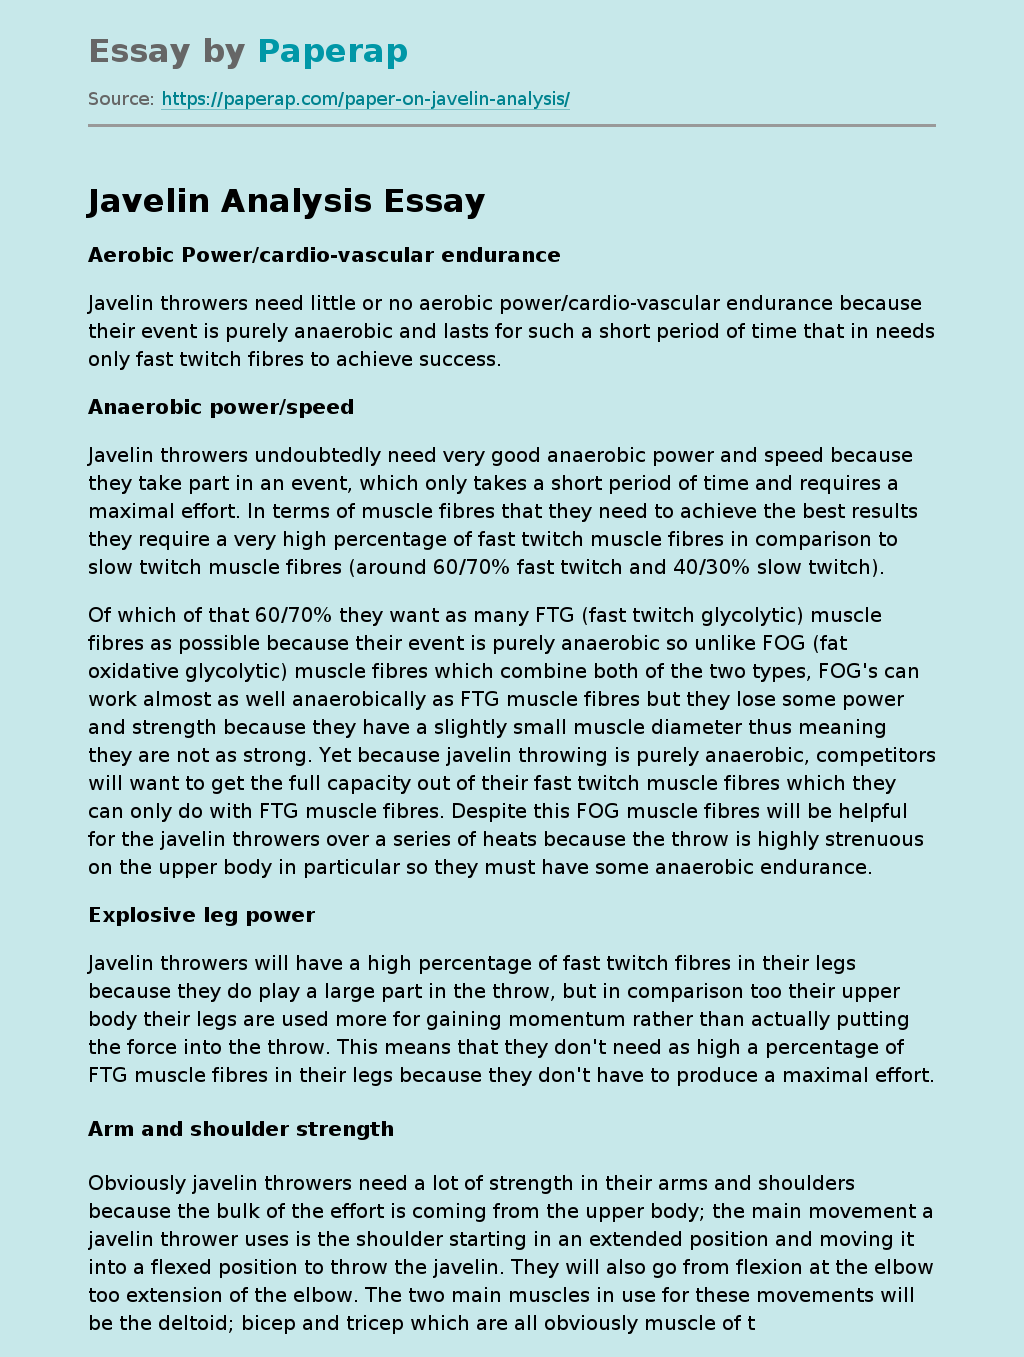 Javelin Analysis